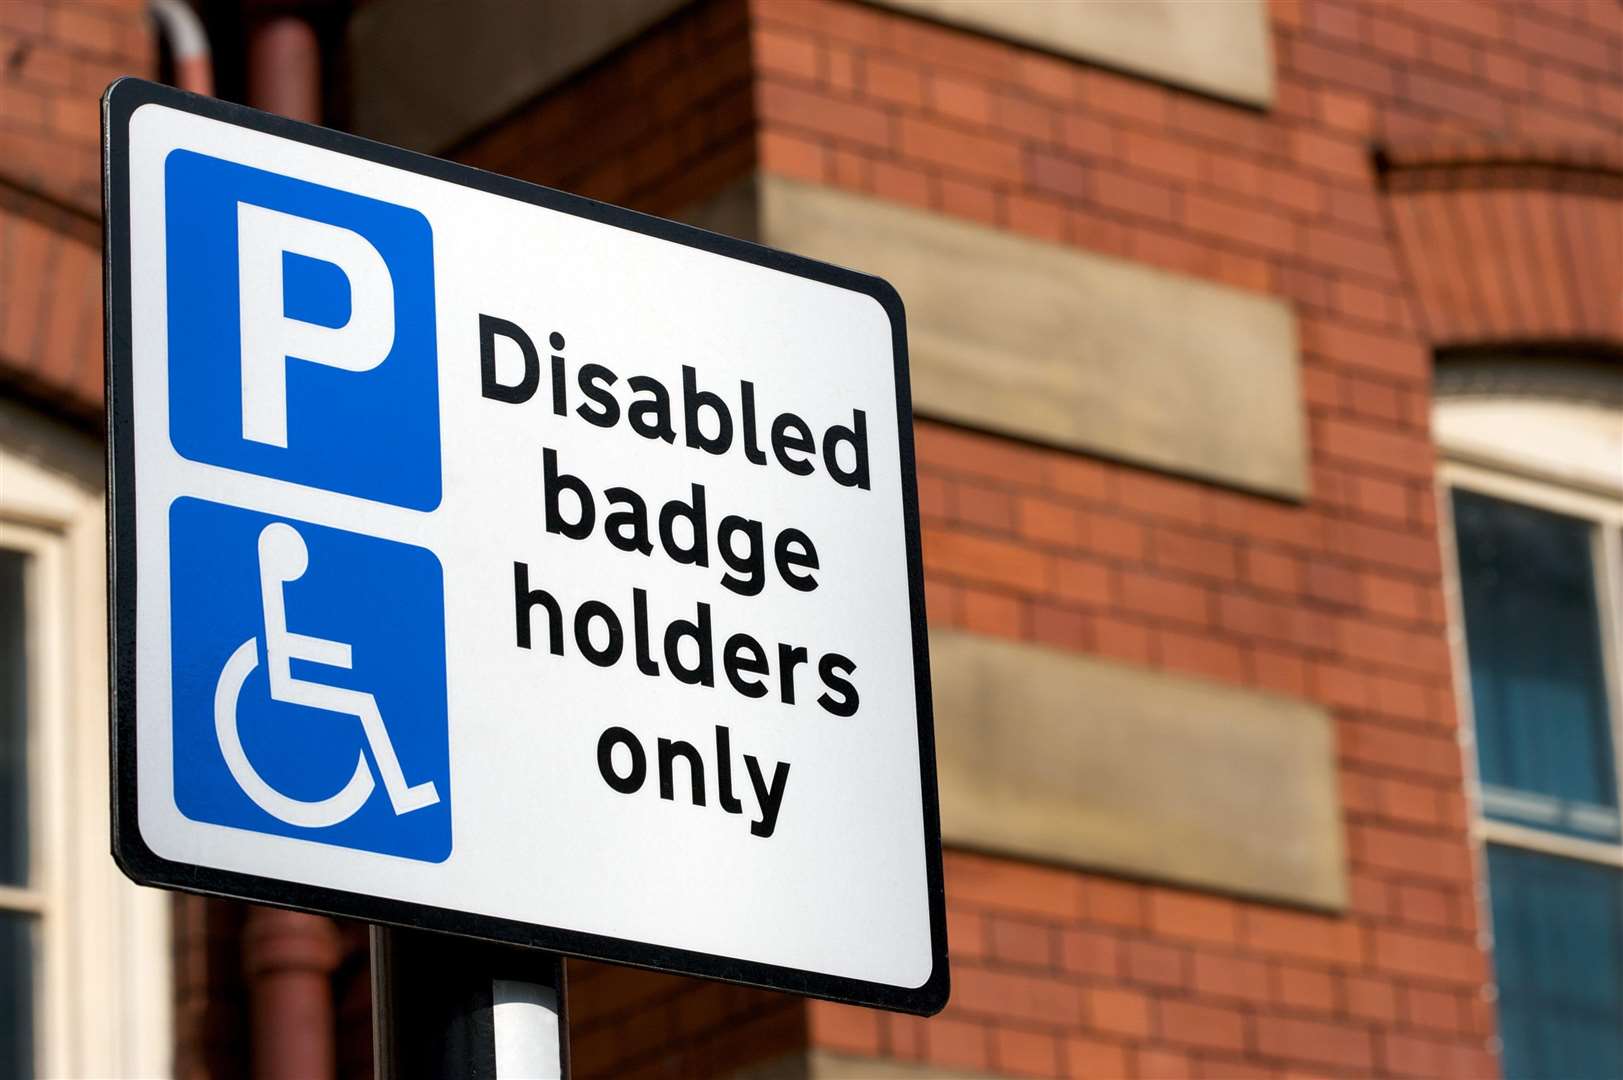 Joe Debrah used the stolen disabled badge at Pembury Hospital